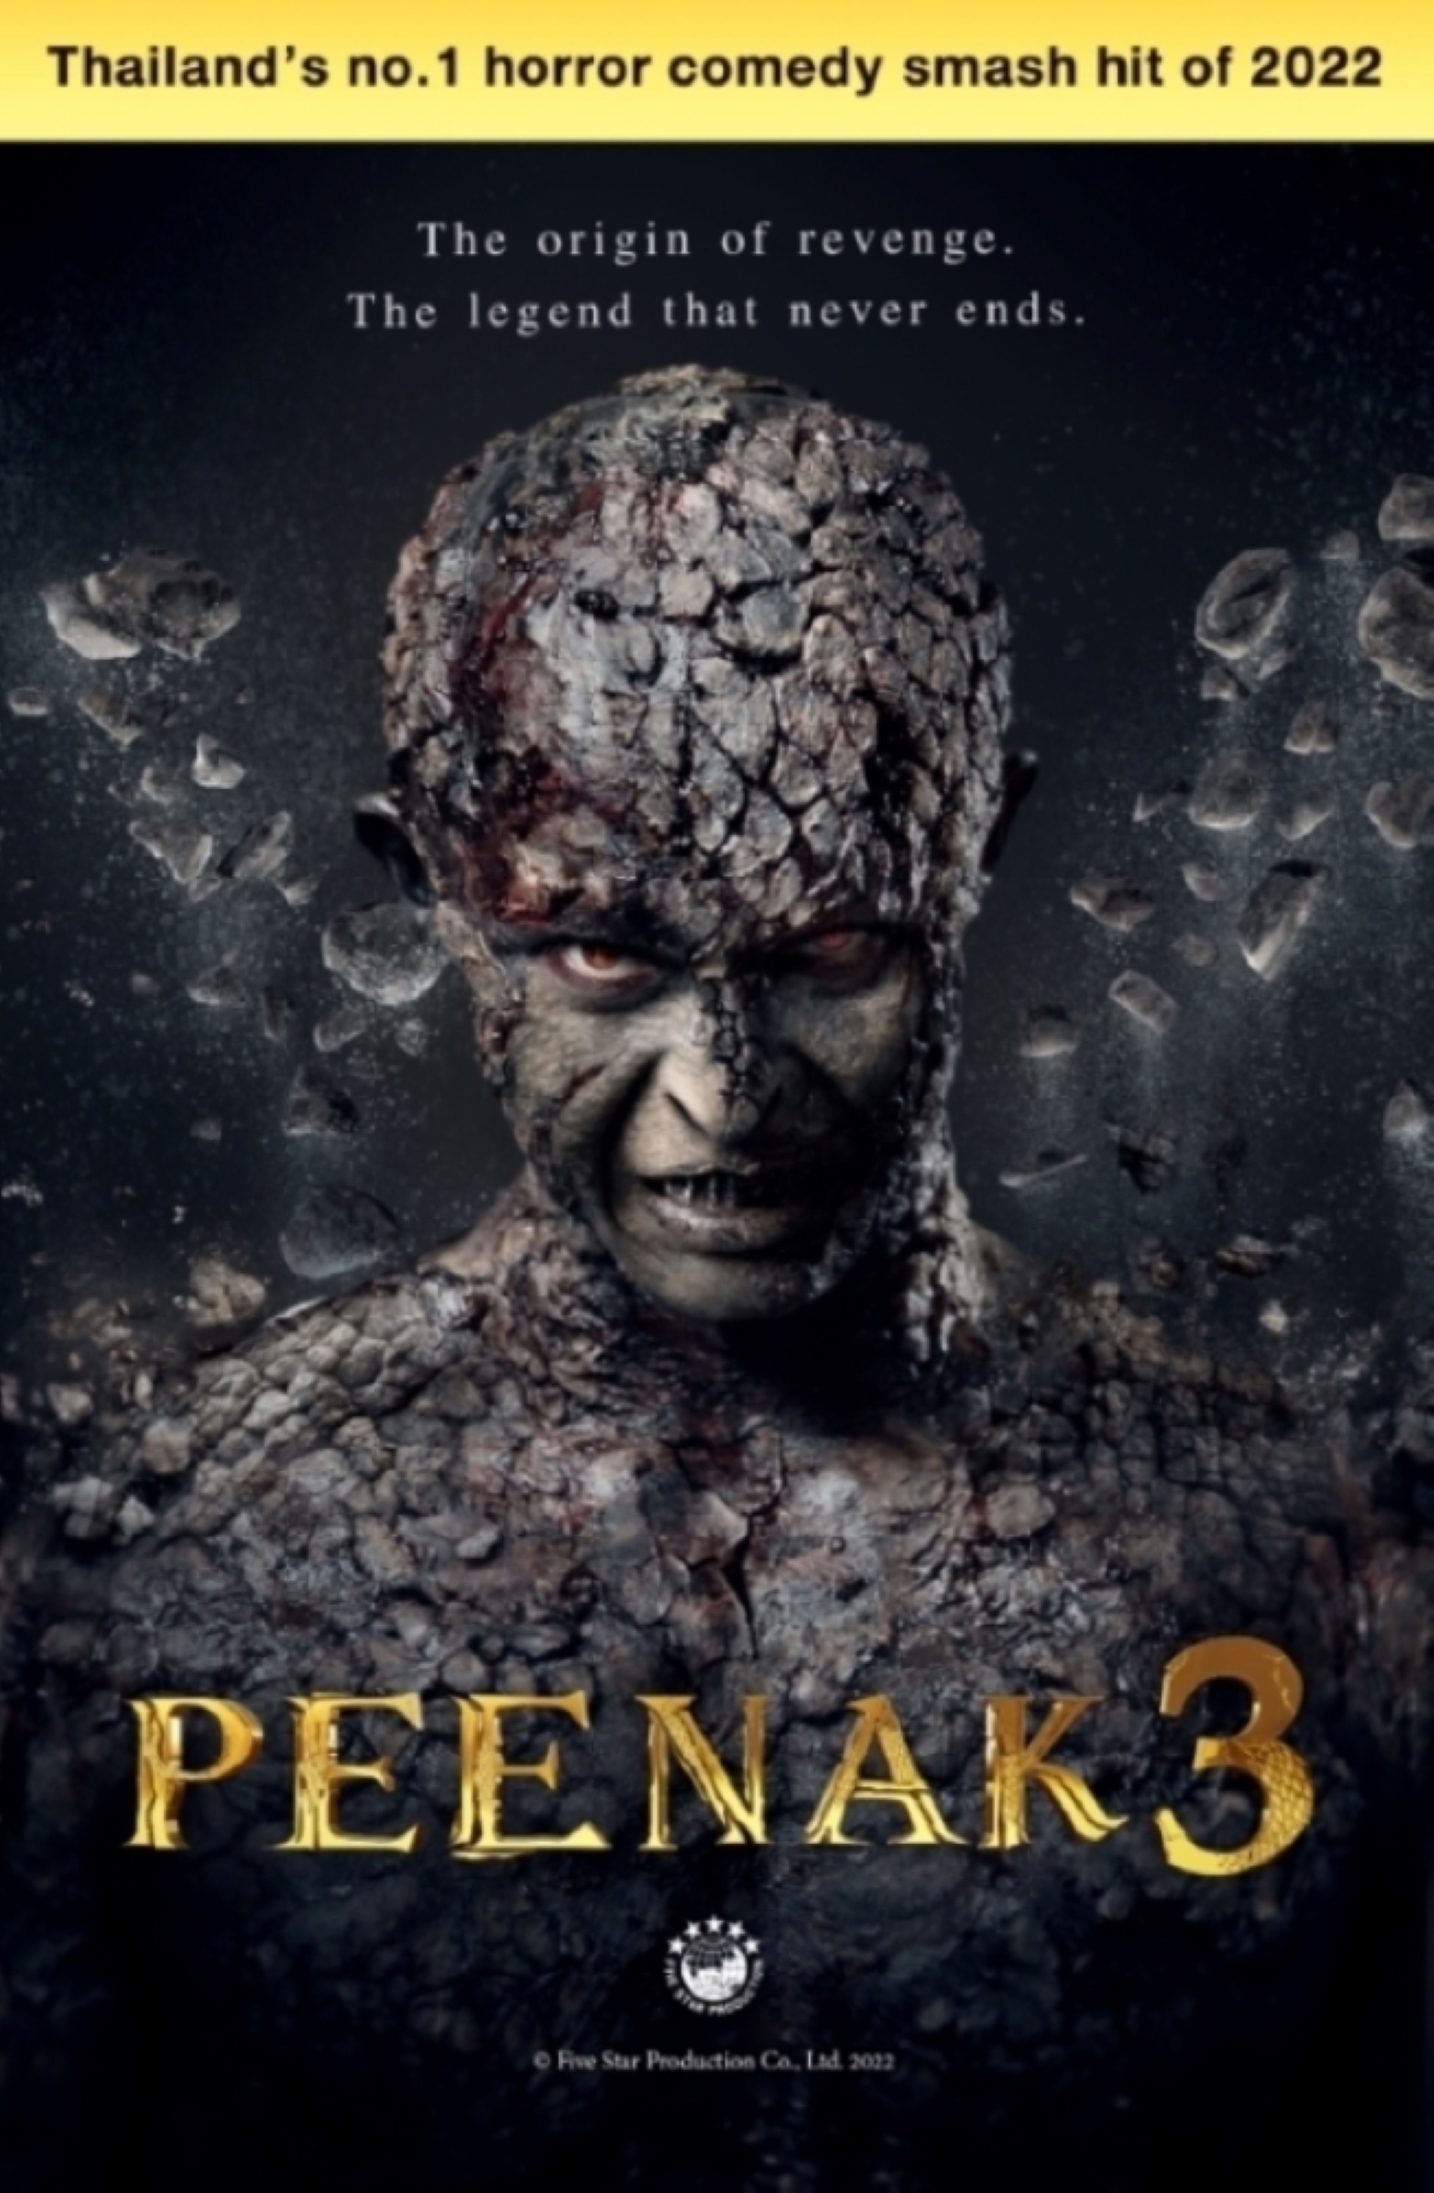 PEENAK 3 | พี่นาค 3Thai Movie Company | Production & DistributionFIVE STAR  PRODUCTION